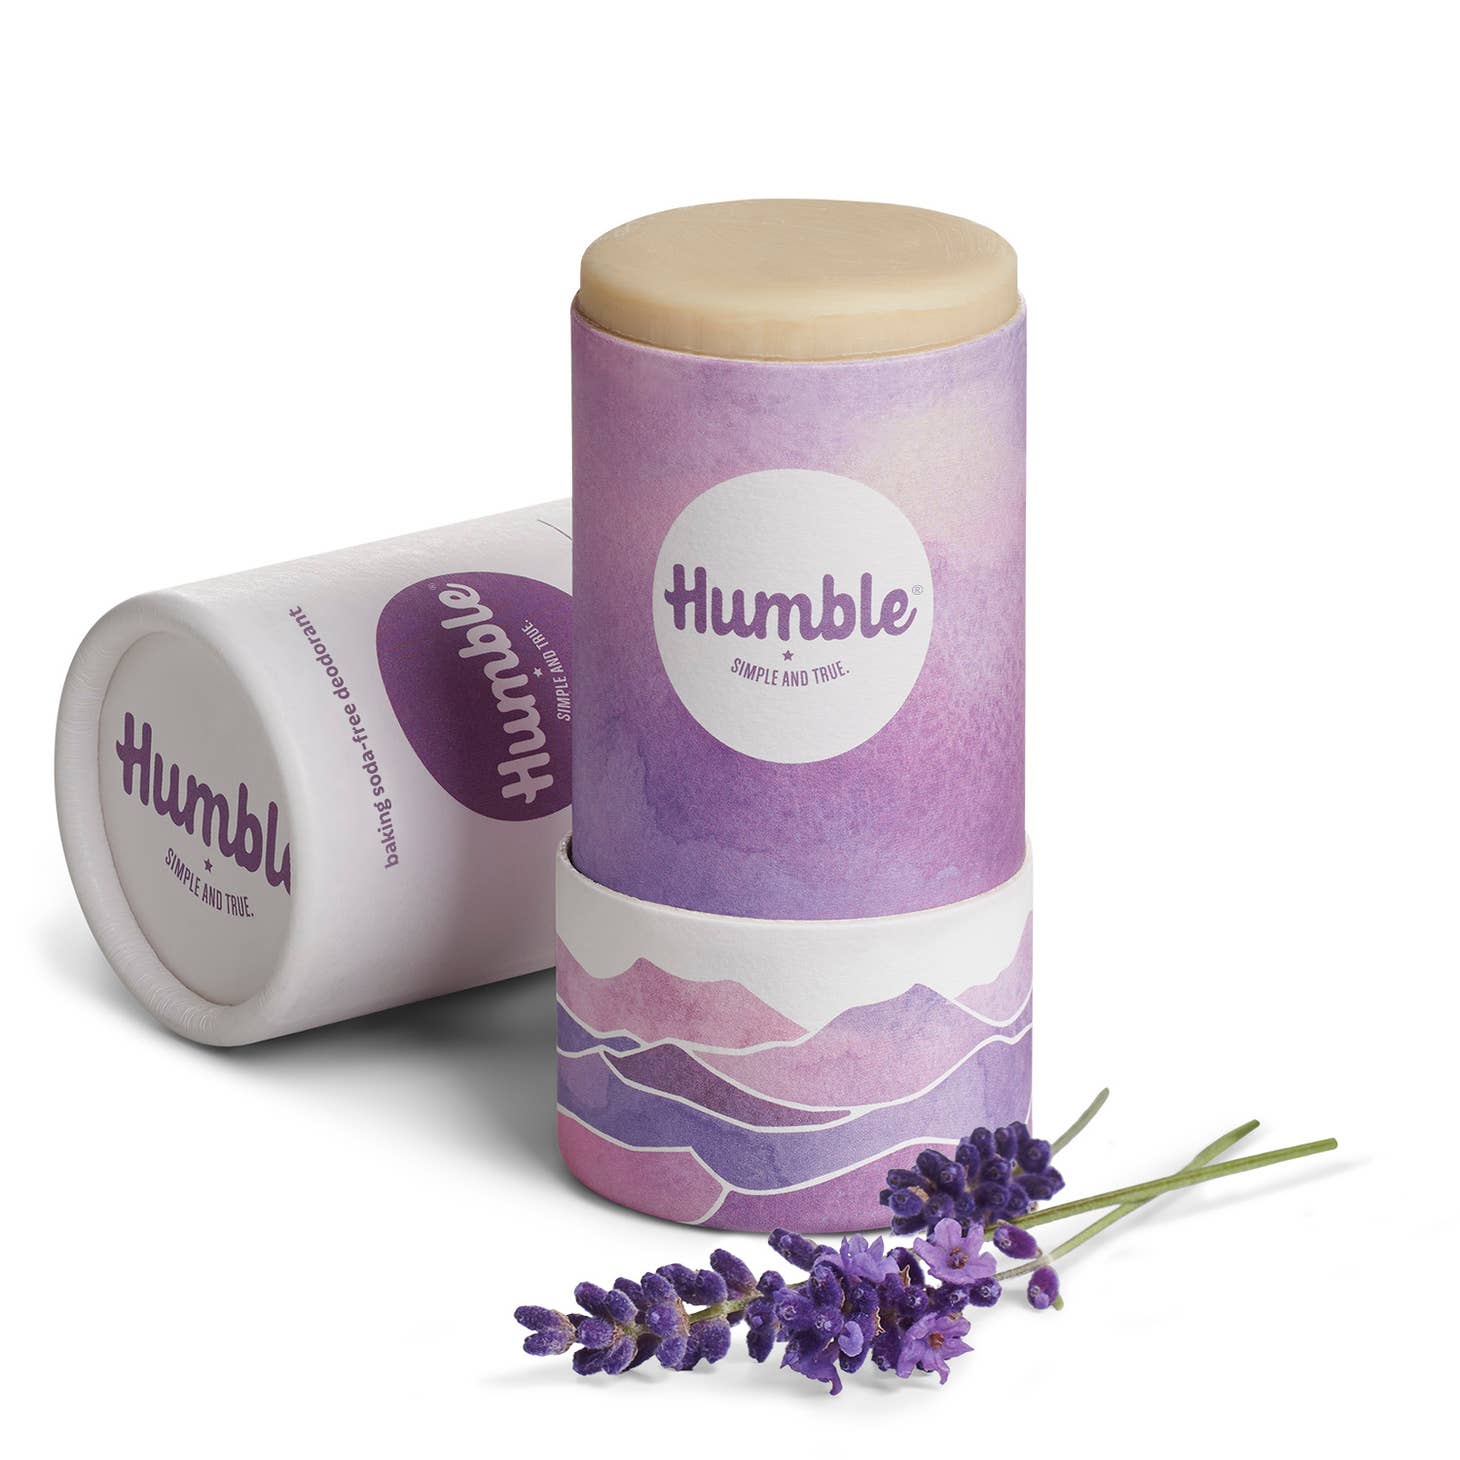 Humble Baking Soda Free Deodorant - Mountain Lavender